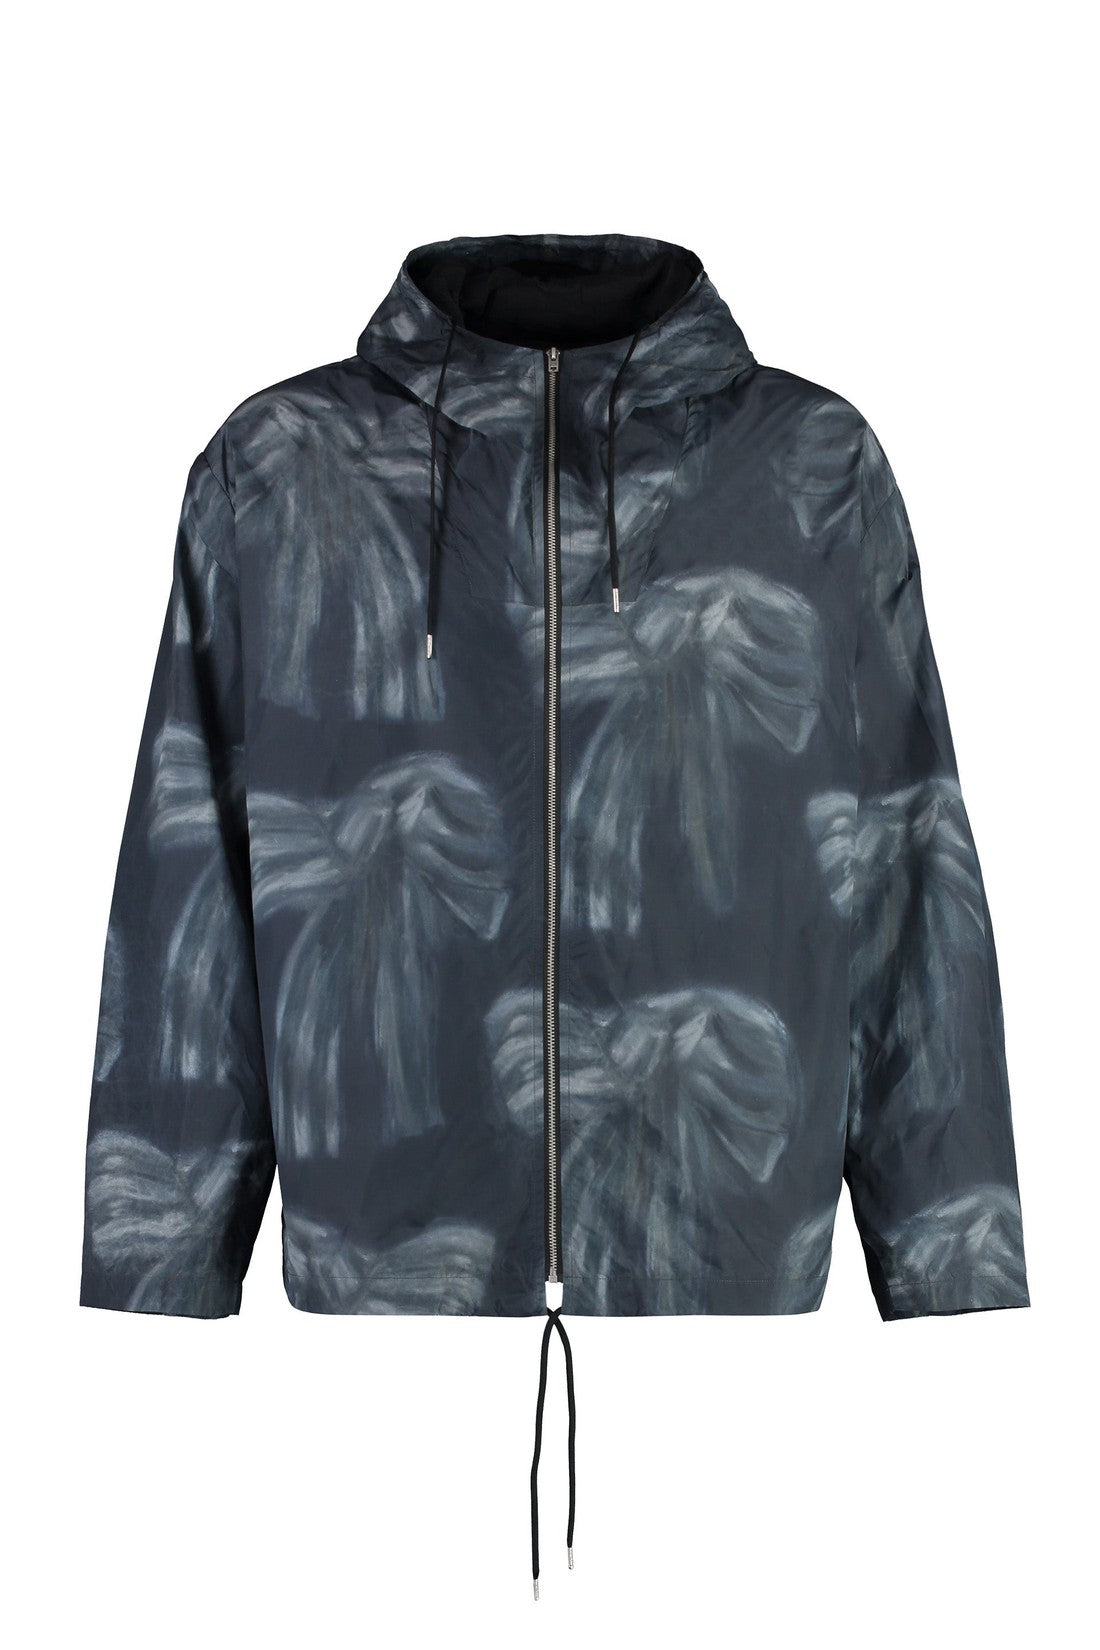 Acne Studios-OUTLET-SALE-Hooded techno fabric raincoat-ARCHIVIST